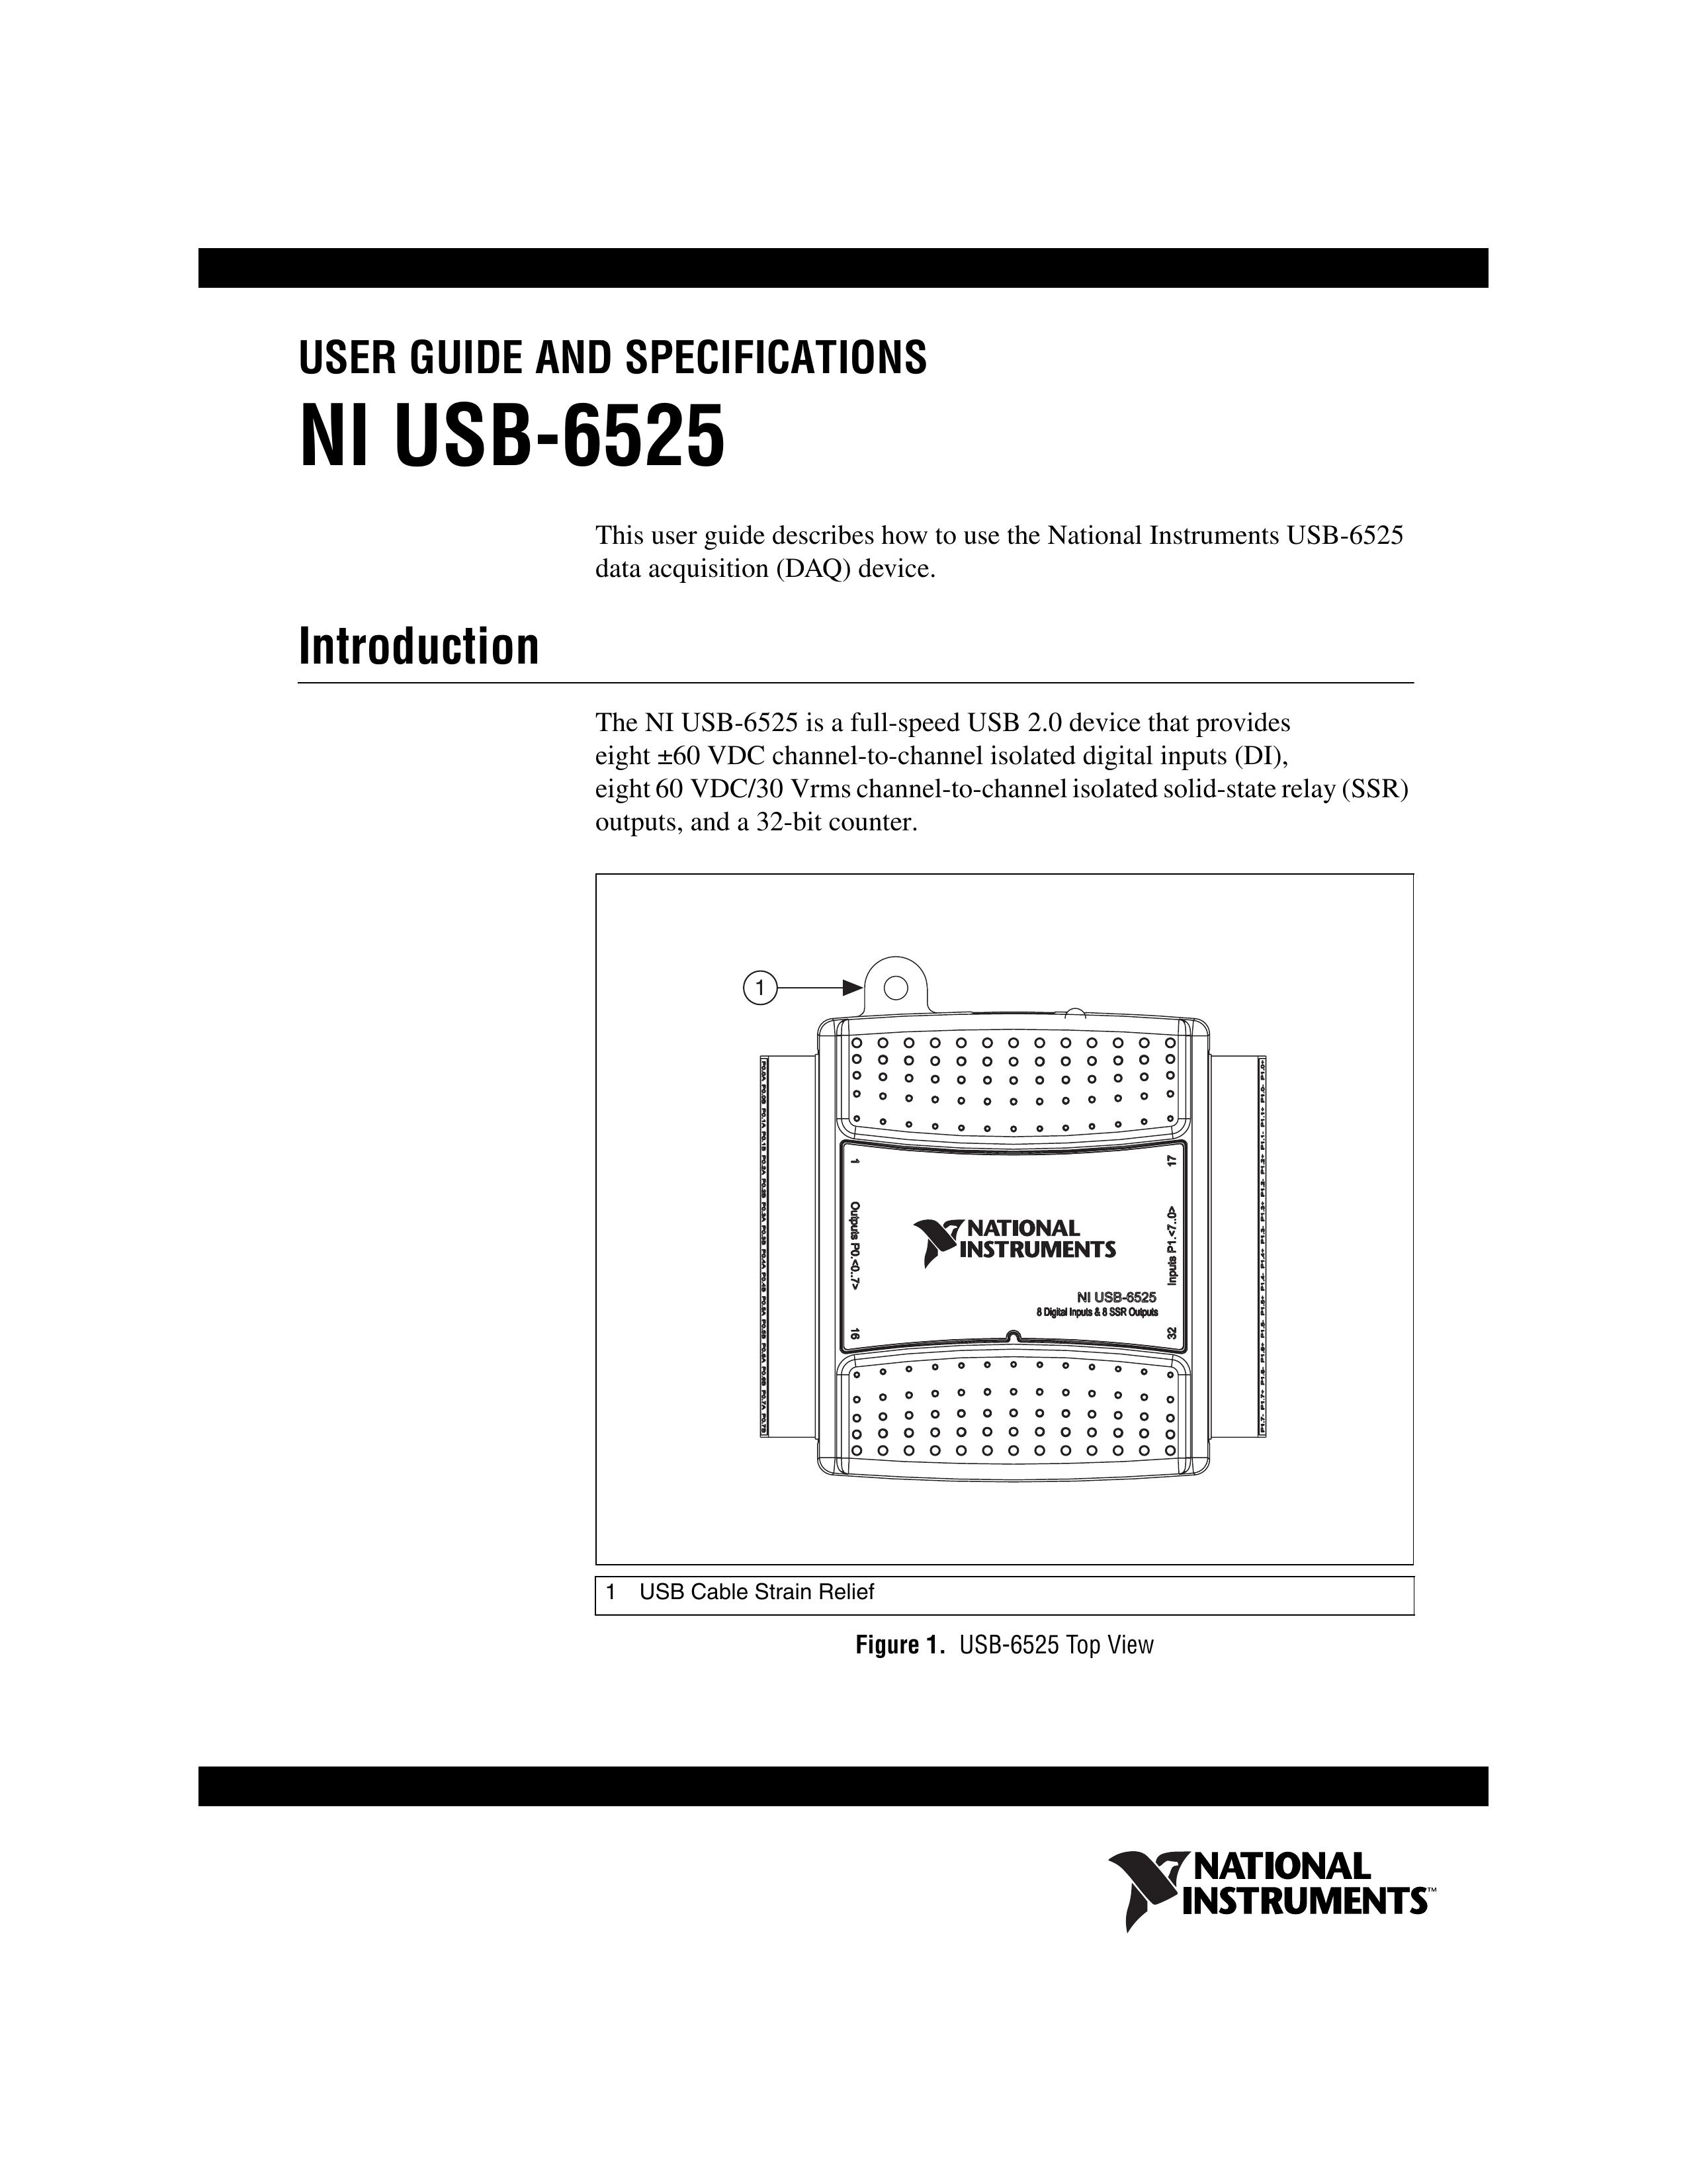 National Instruments NI USB-6525 Marine RADAR User Manual